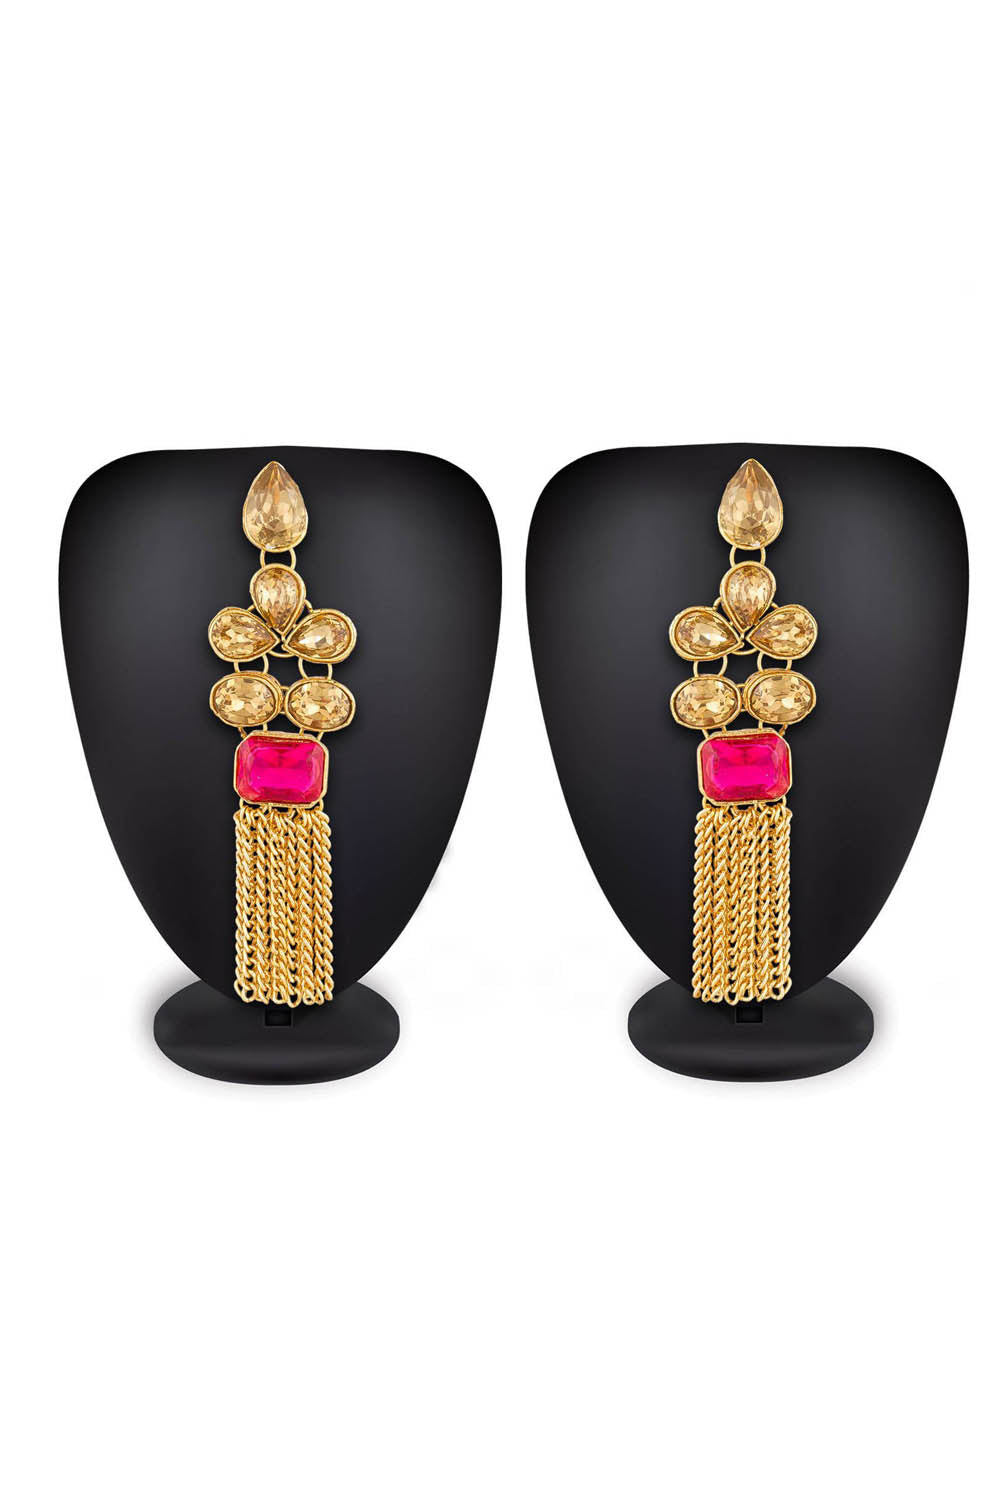 Women's Alloy Earrings in Pink and Golden